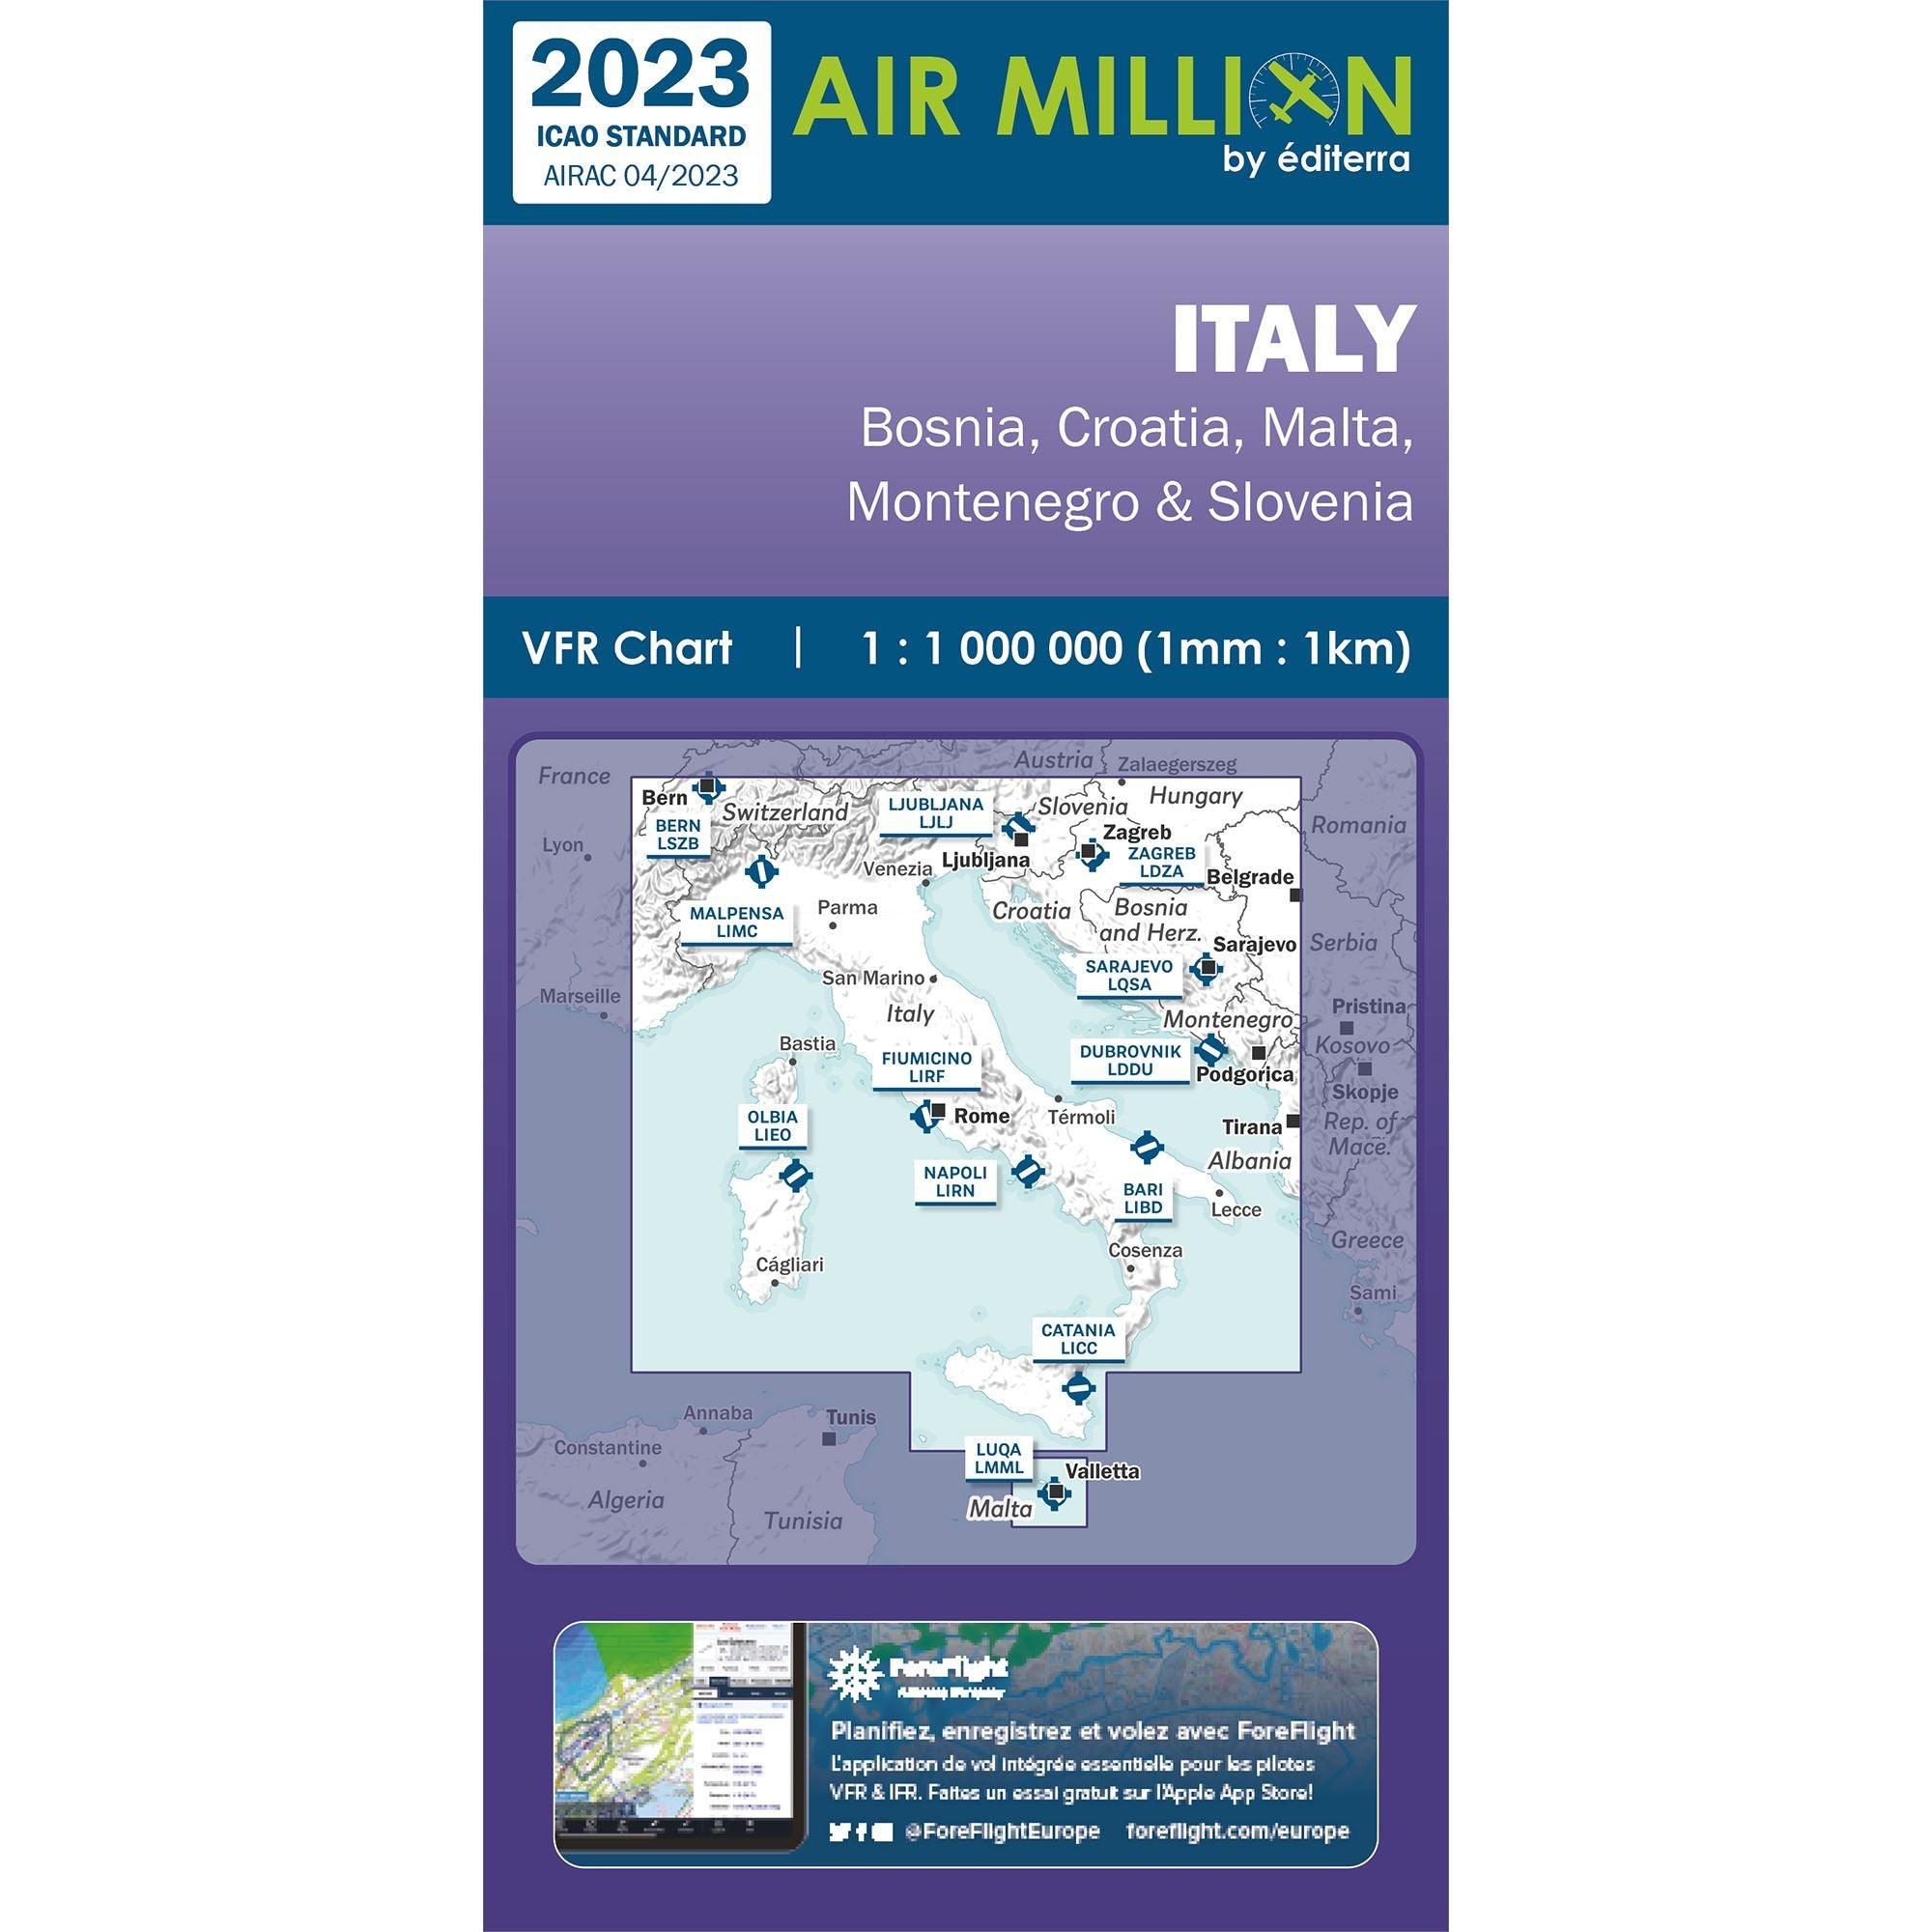 CARTE AIR MILLION ITALY 2023 Cartes Air Million Editerra